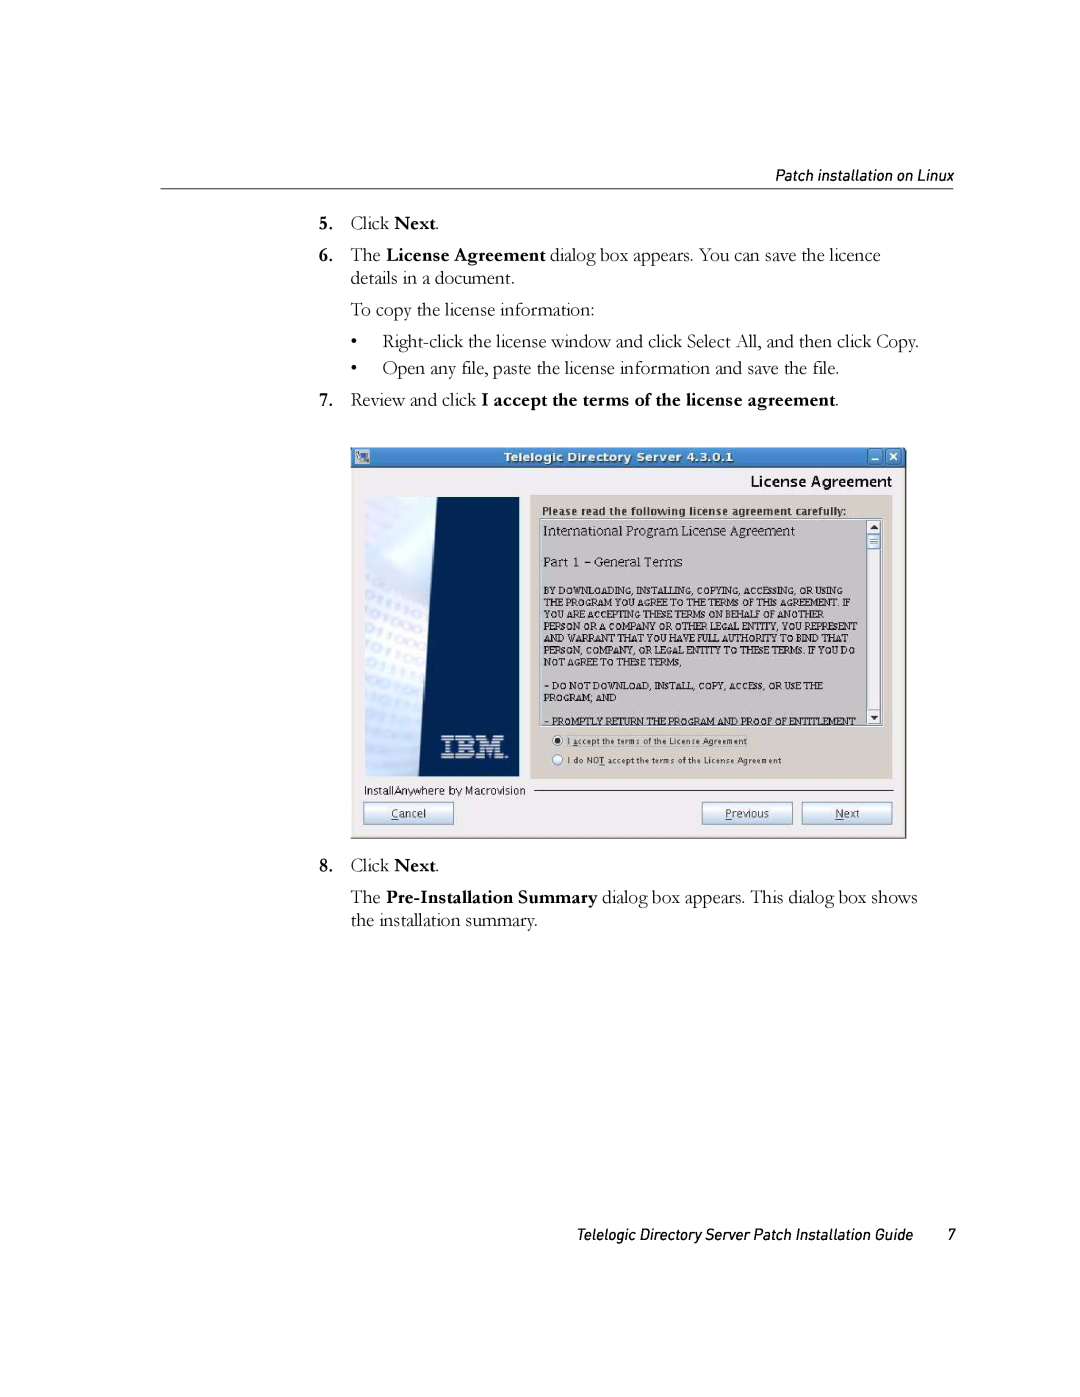 IBM Telelogic Directory Server manual Click Next 